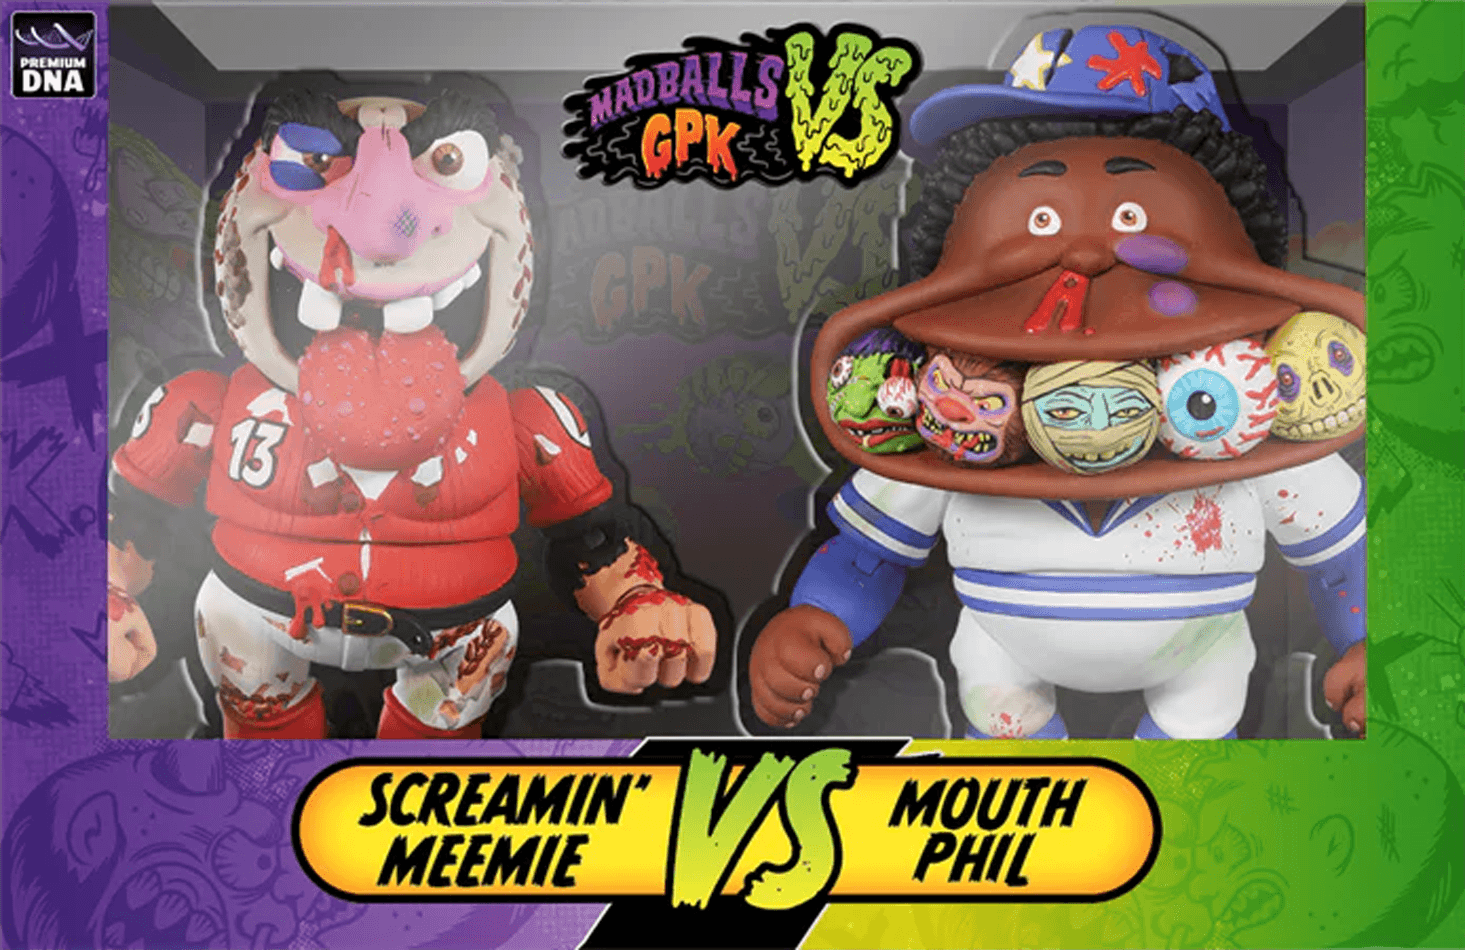 DNAPDNAMBVGPKMPVSM Madballs vs GPK - Mouth Phil vs Screamin' Meemie Action Figure Set - Premium DNA Toys - Titan Pop Culture